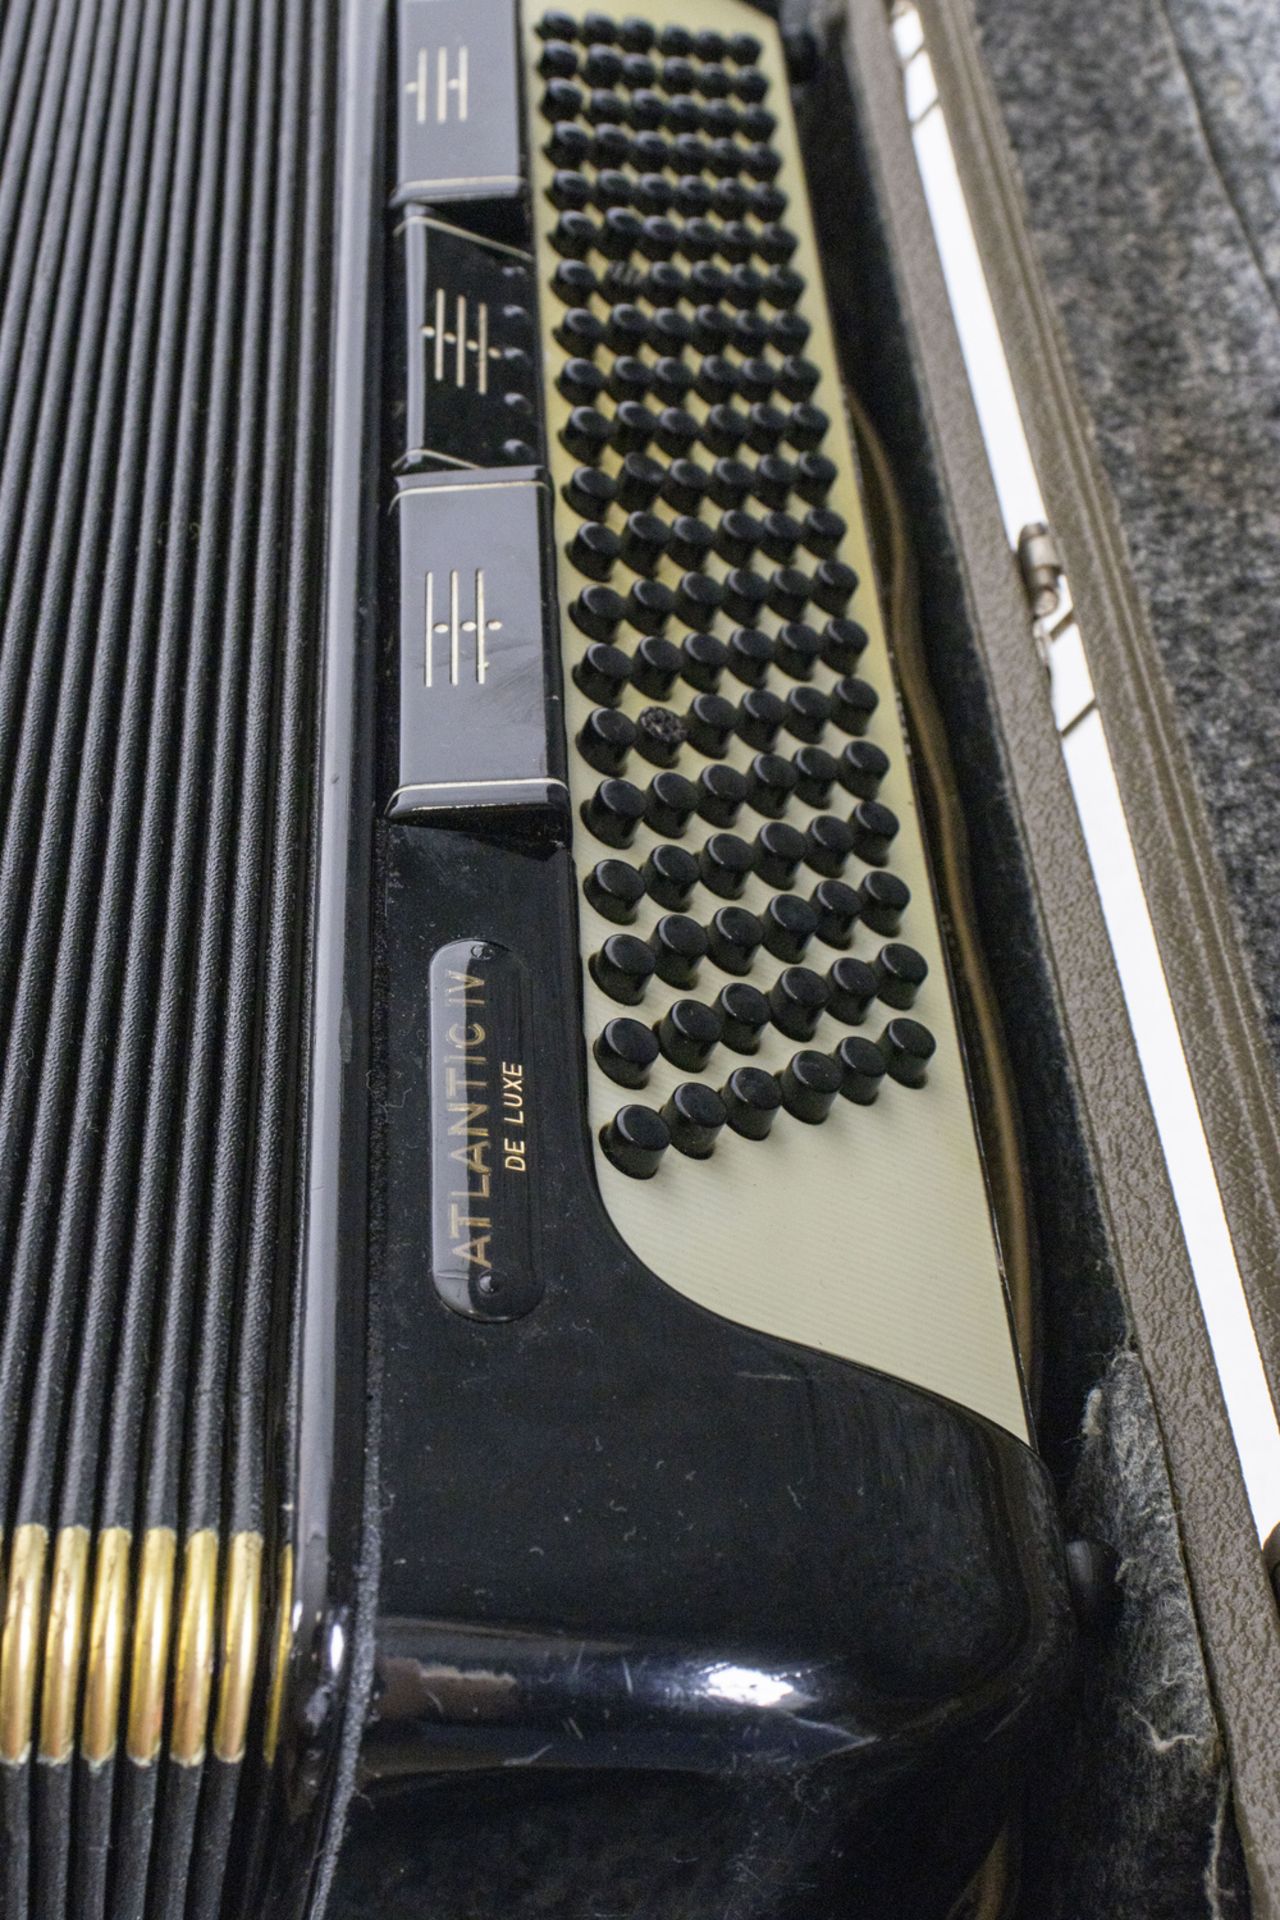 Akkordeon 'Club III B' / An accordion 'Club III B', Hohner - Image 3 of 3